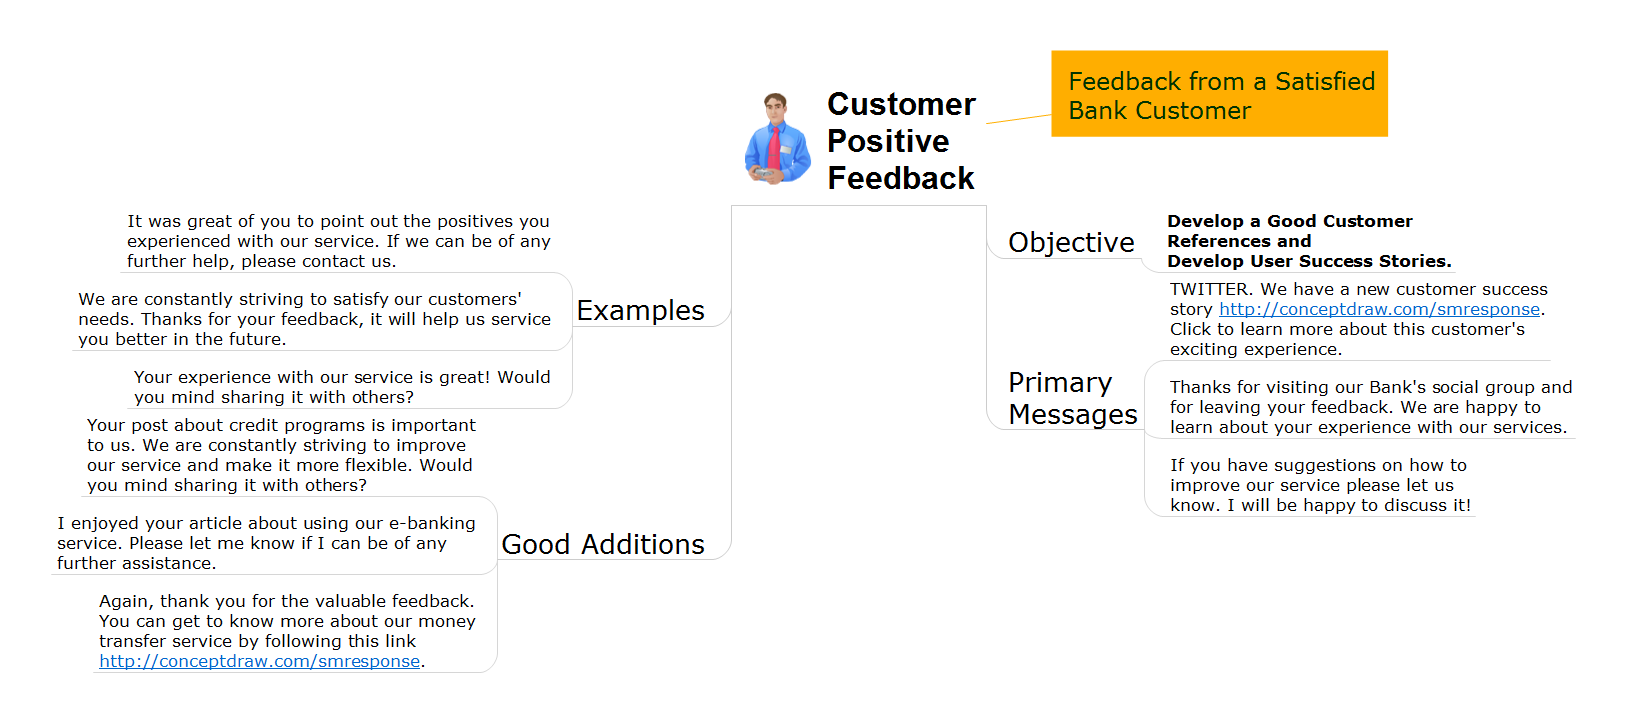 Social media response action mindmap - Bank customer positive feedback